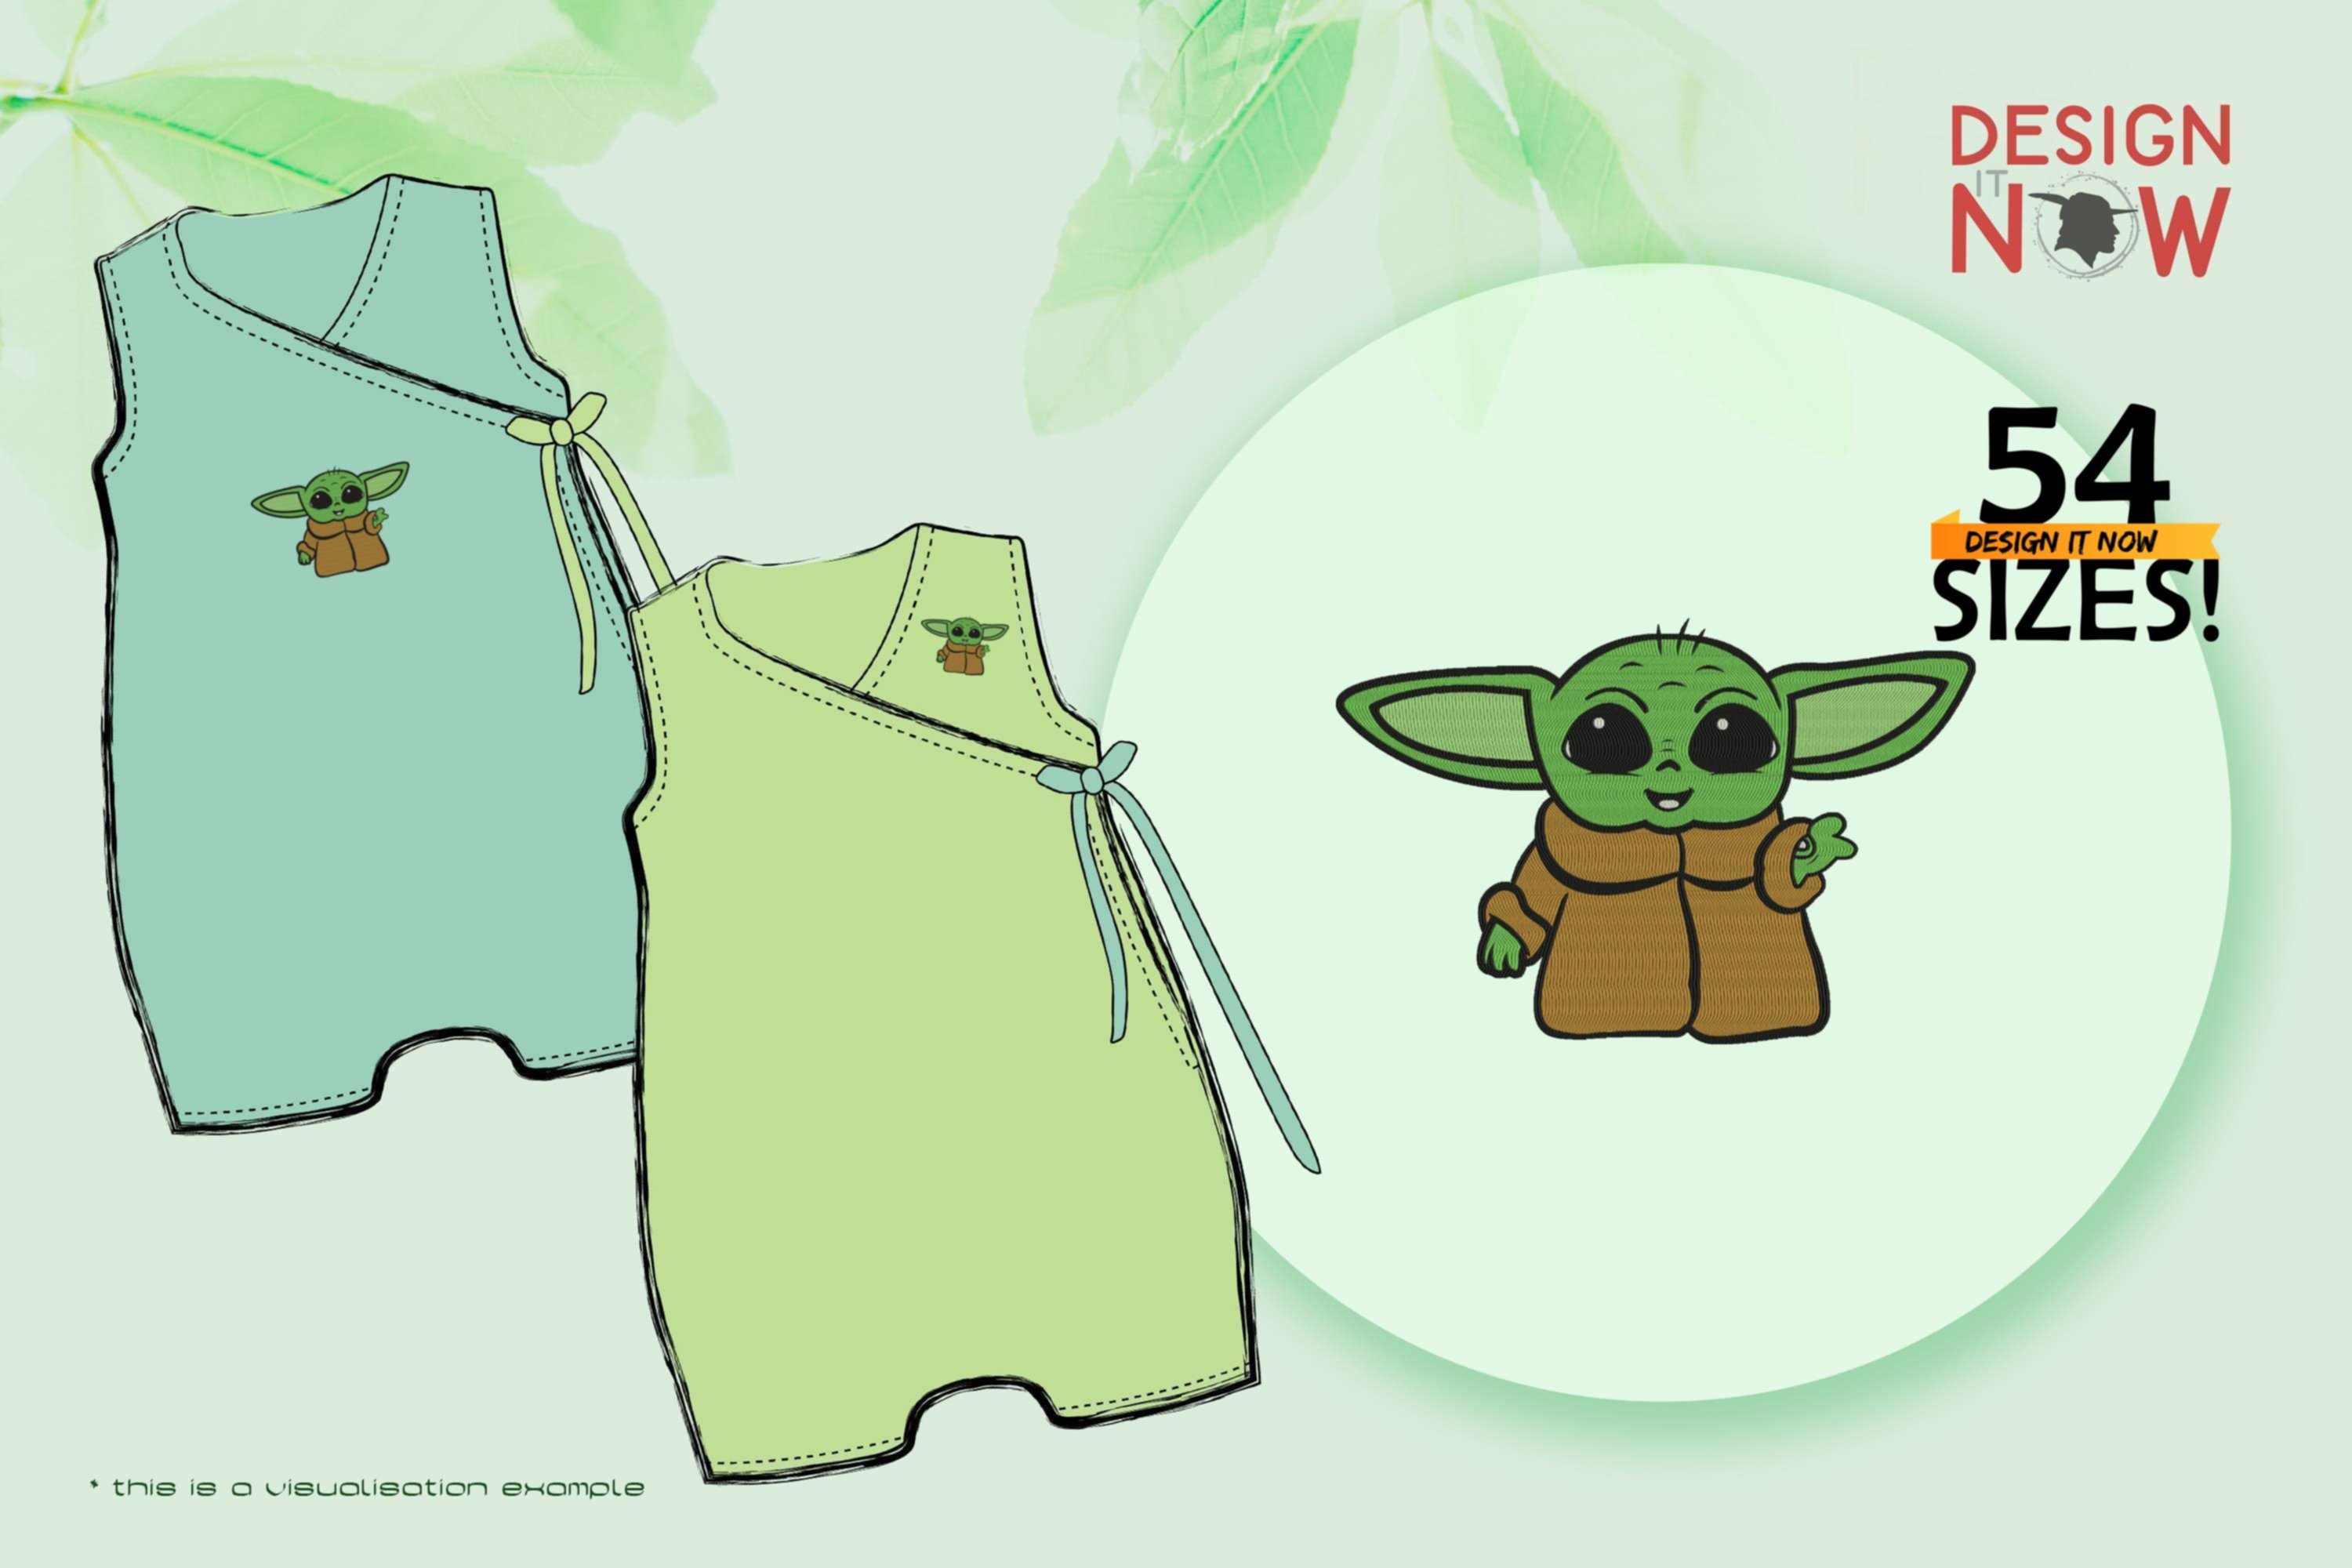 Tribute To Fictional Character Grogu aka Baby Yoda (Hello)